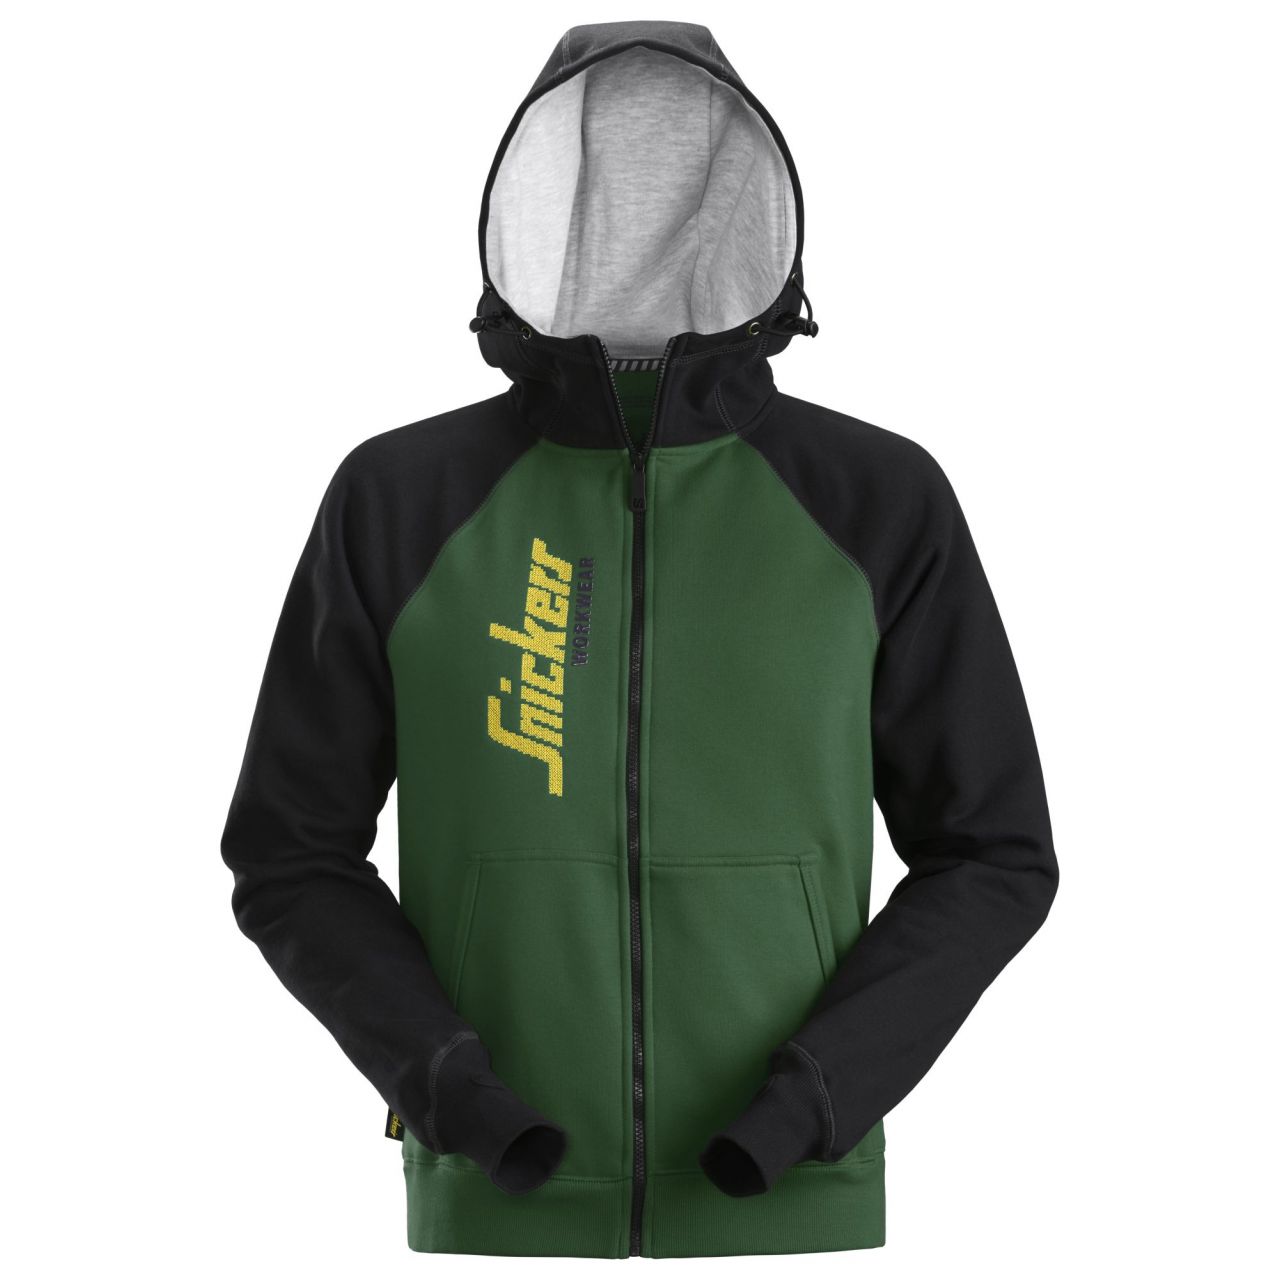 Sudadera con capucha con cremallera completa y logotipo Verde bosque/Negra talla XXL